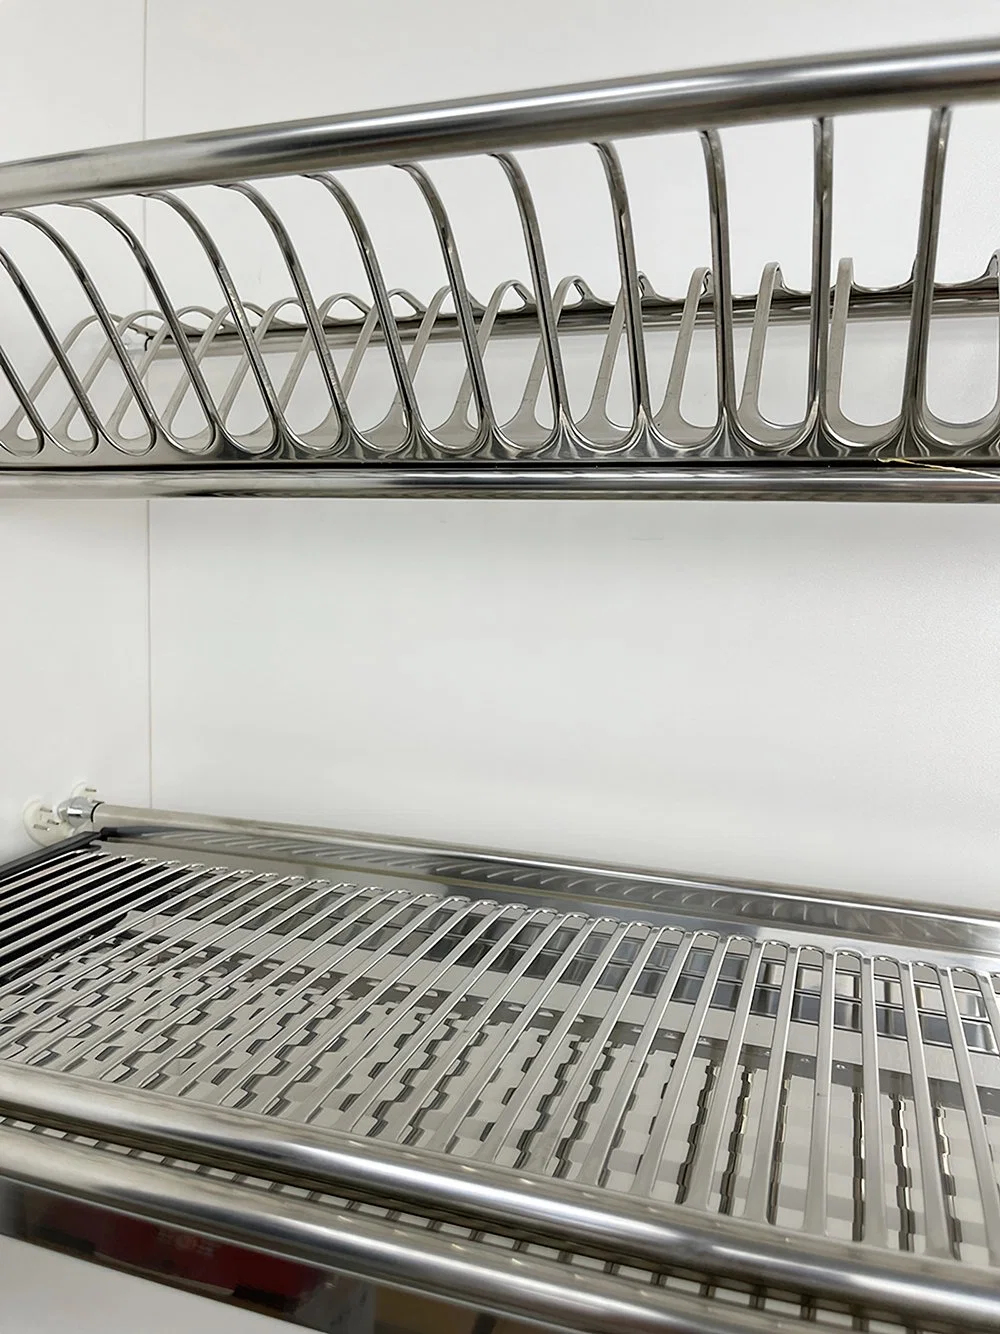 2-Tier Stainless Steel Dish Drying Rack Plate Bowl Storage Organizer